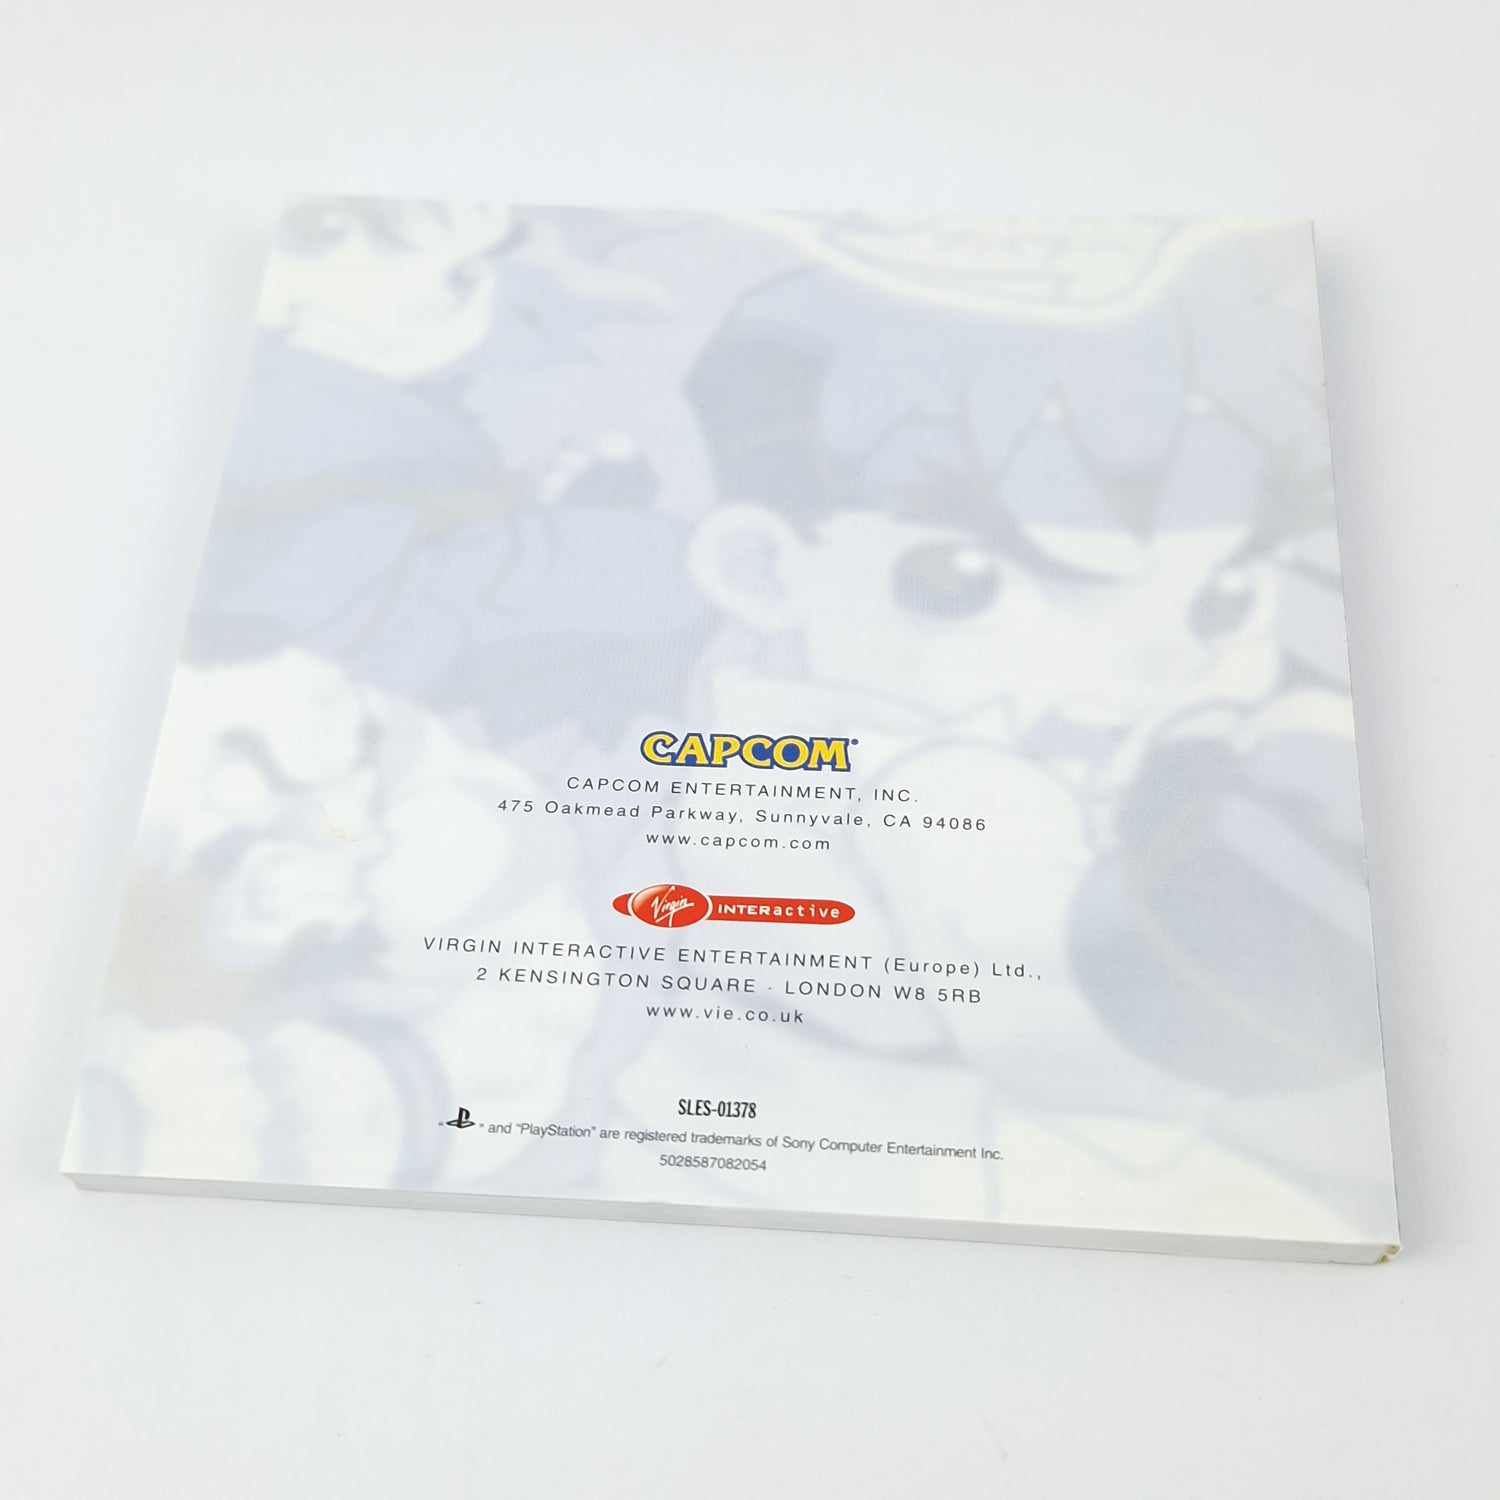 Playstation 1 Spiel : Pocket Fighter - CD Anleitung OVP | PS1 PSX PSone PAL